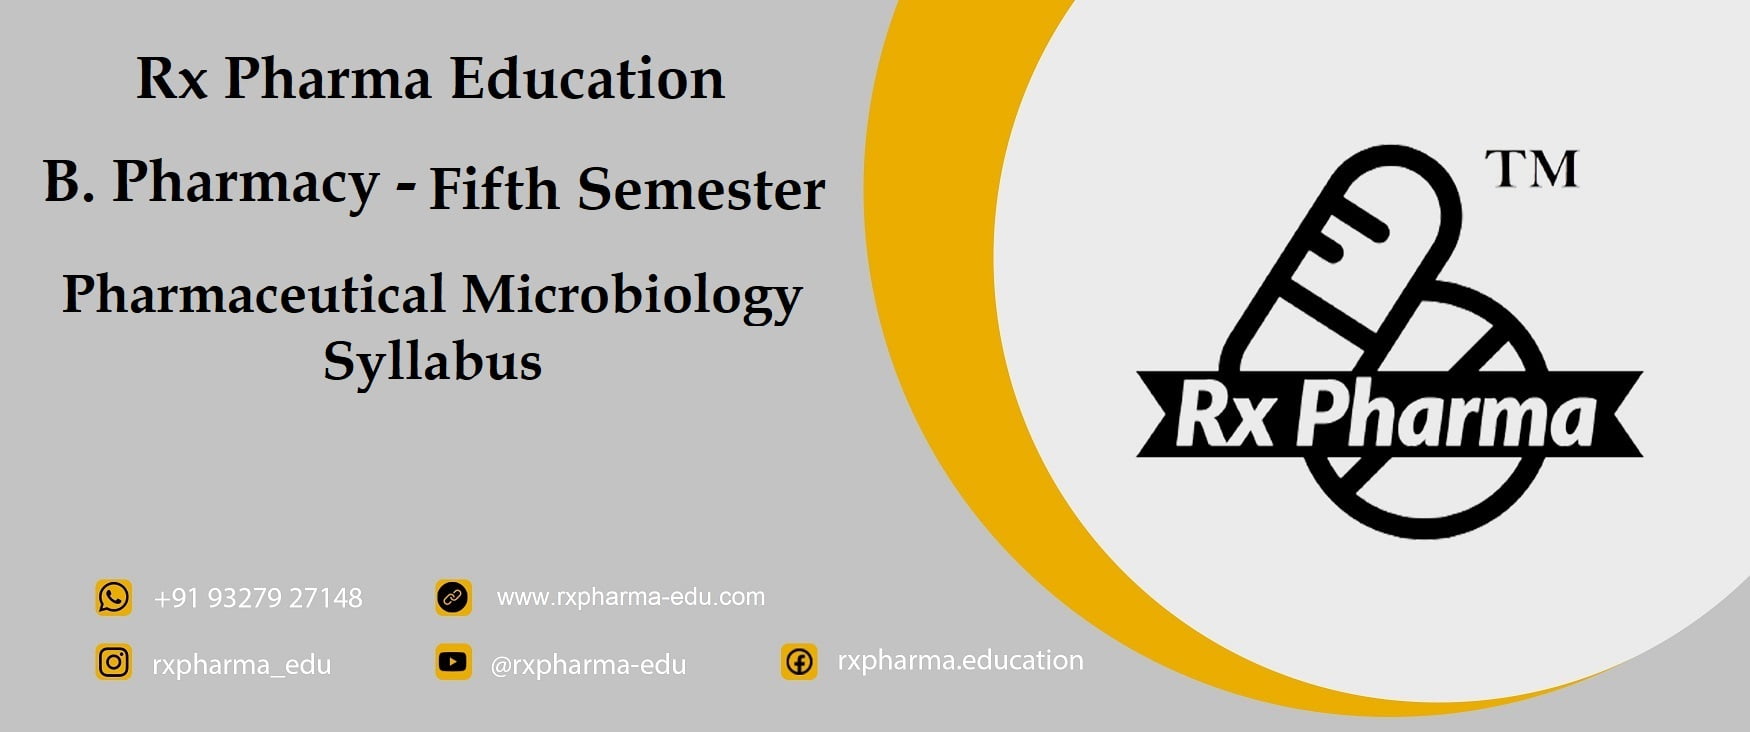 Pharmaceutical Microbiology Syllabus Banner